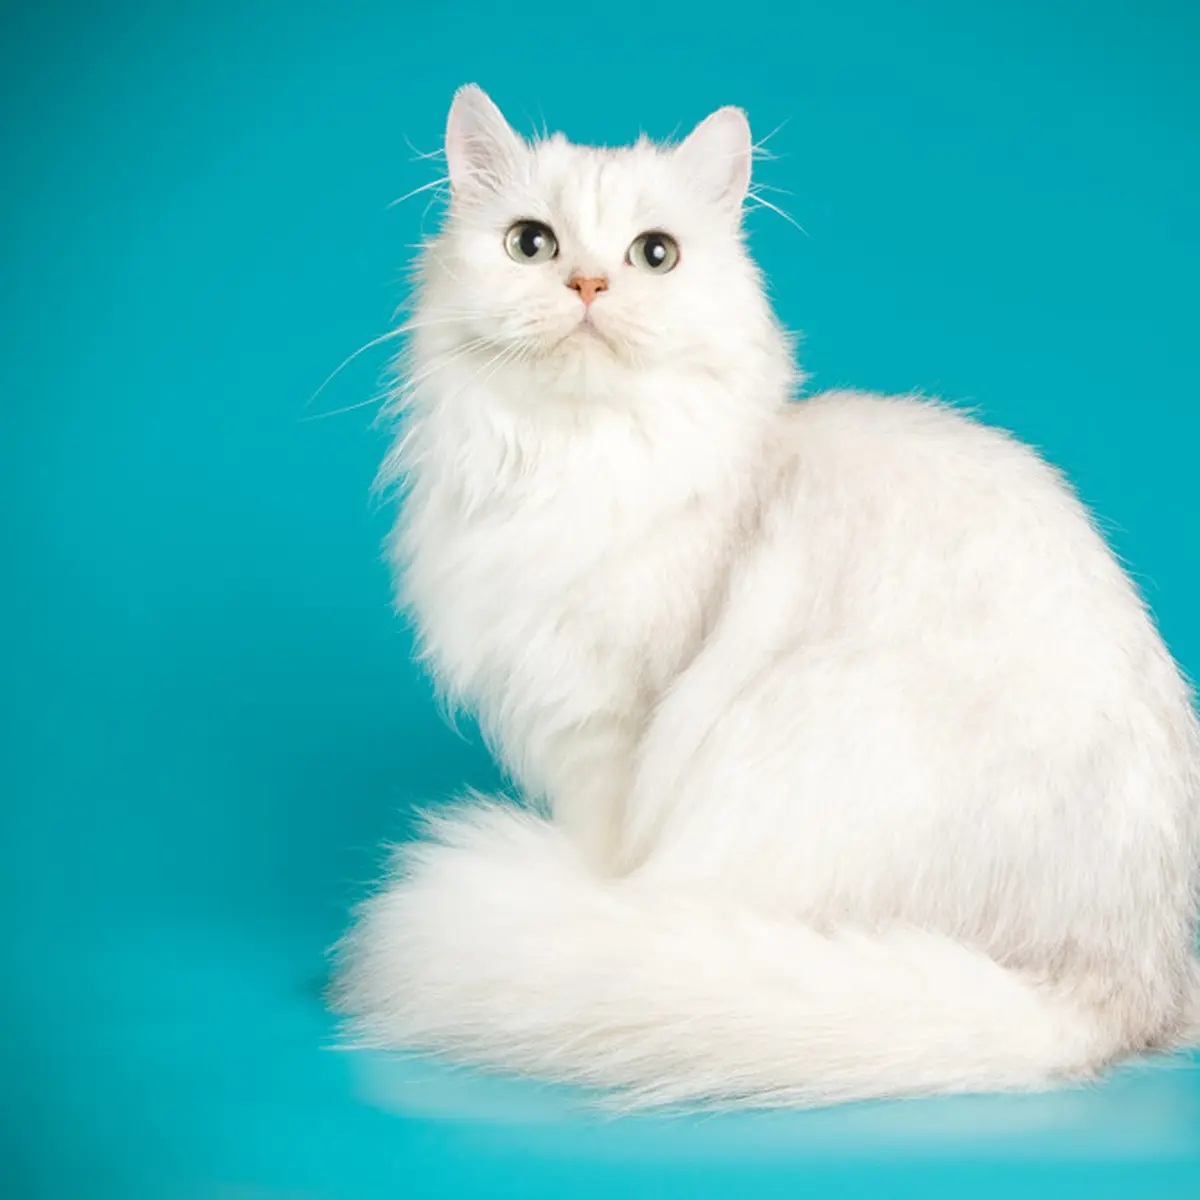 Sensasi Dipijat Oleh Kucing Menjadi Tanda Kucing Cinta dan Sayang dengan Kamu! Inilah 4 Tanda Kucing Mencintai